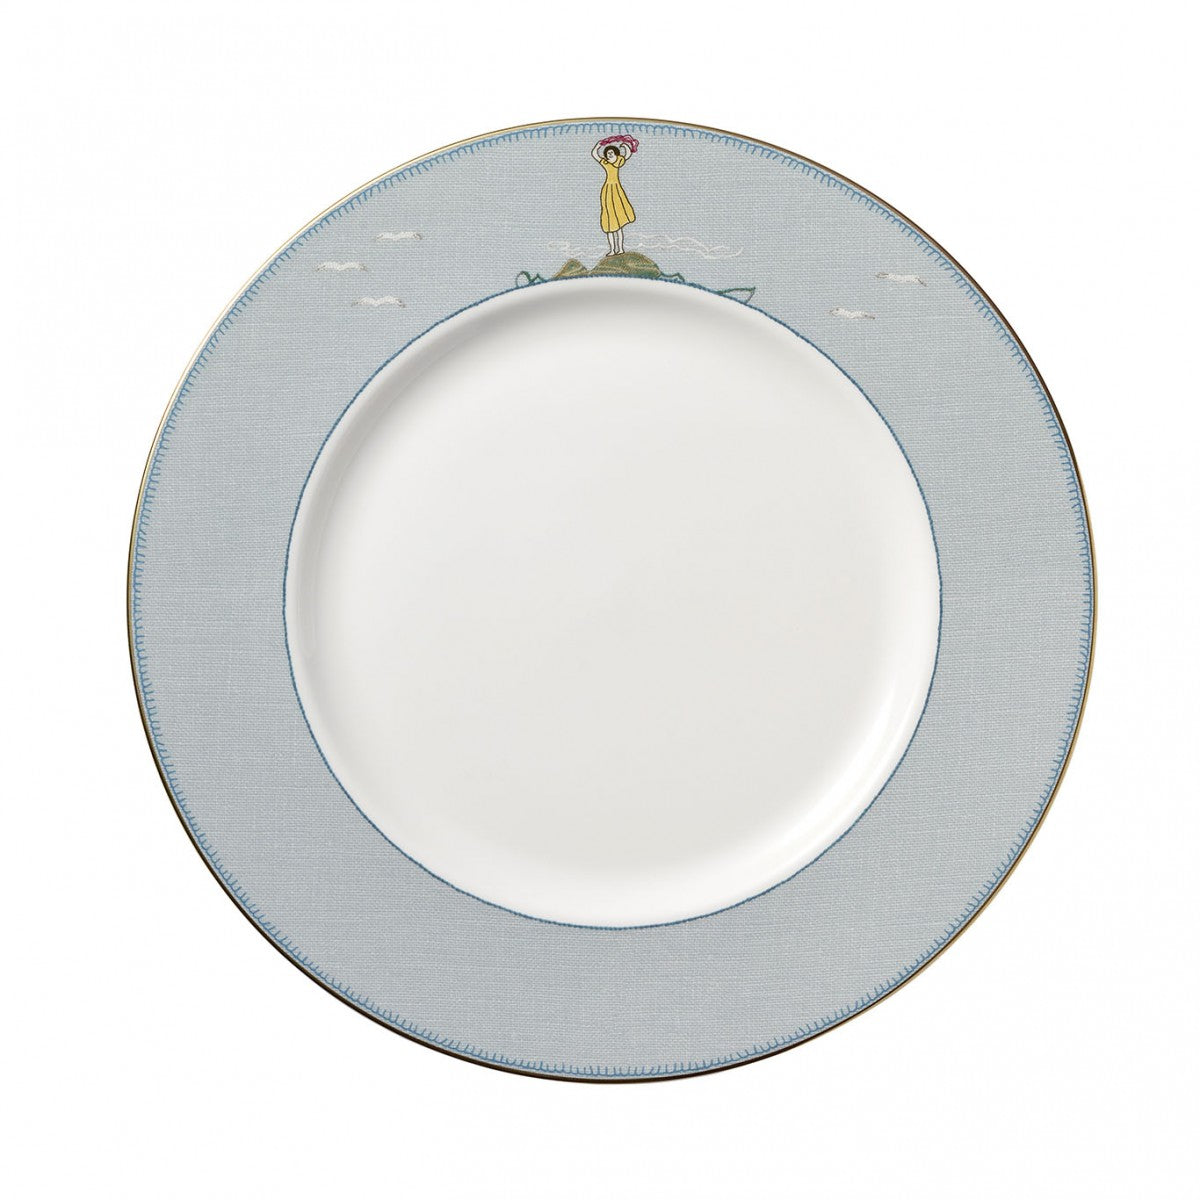 Wedgwood Kit Kemp Sailors Farewell Dinner Plate10.75"